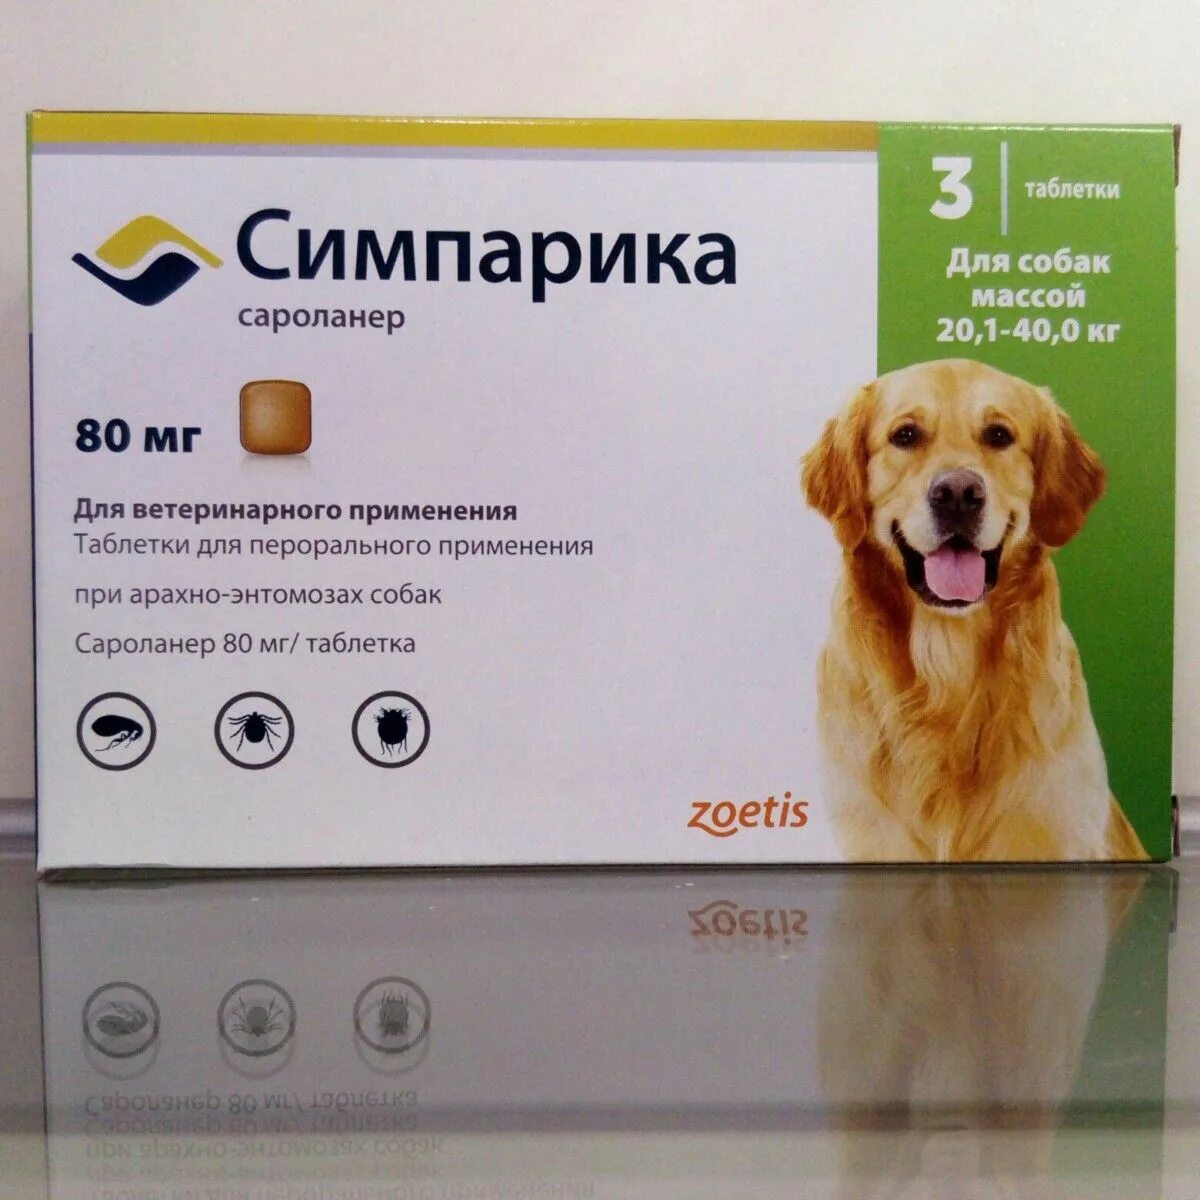 Средство от клещей для собак таблетки. Симпарика 2,5-5. Симпарика 20 мг. Симпарика таблетка 10-20 кг. Simparica Симпарика таблетки для собак.